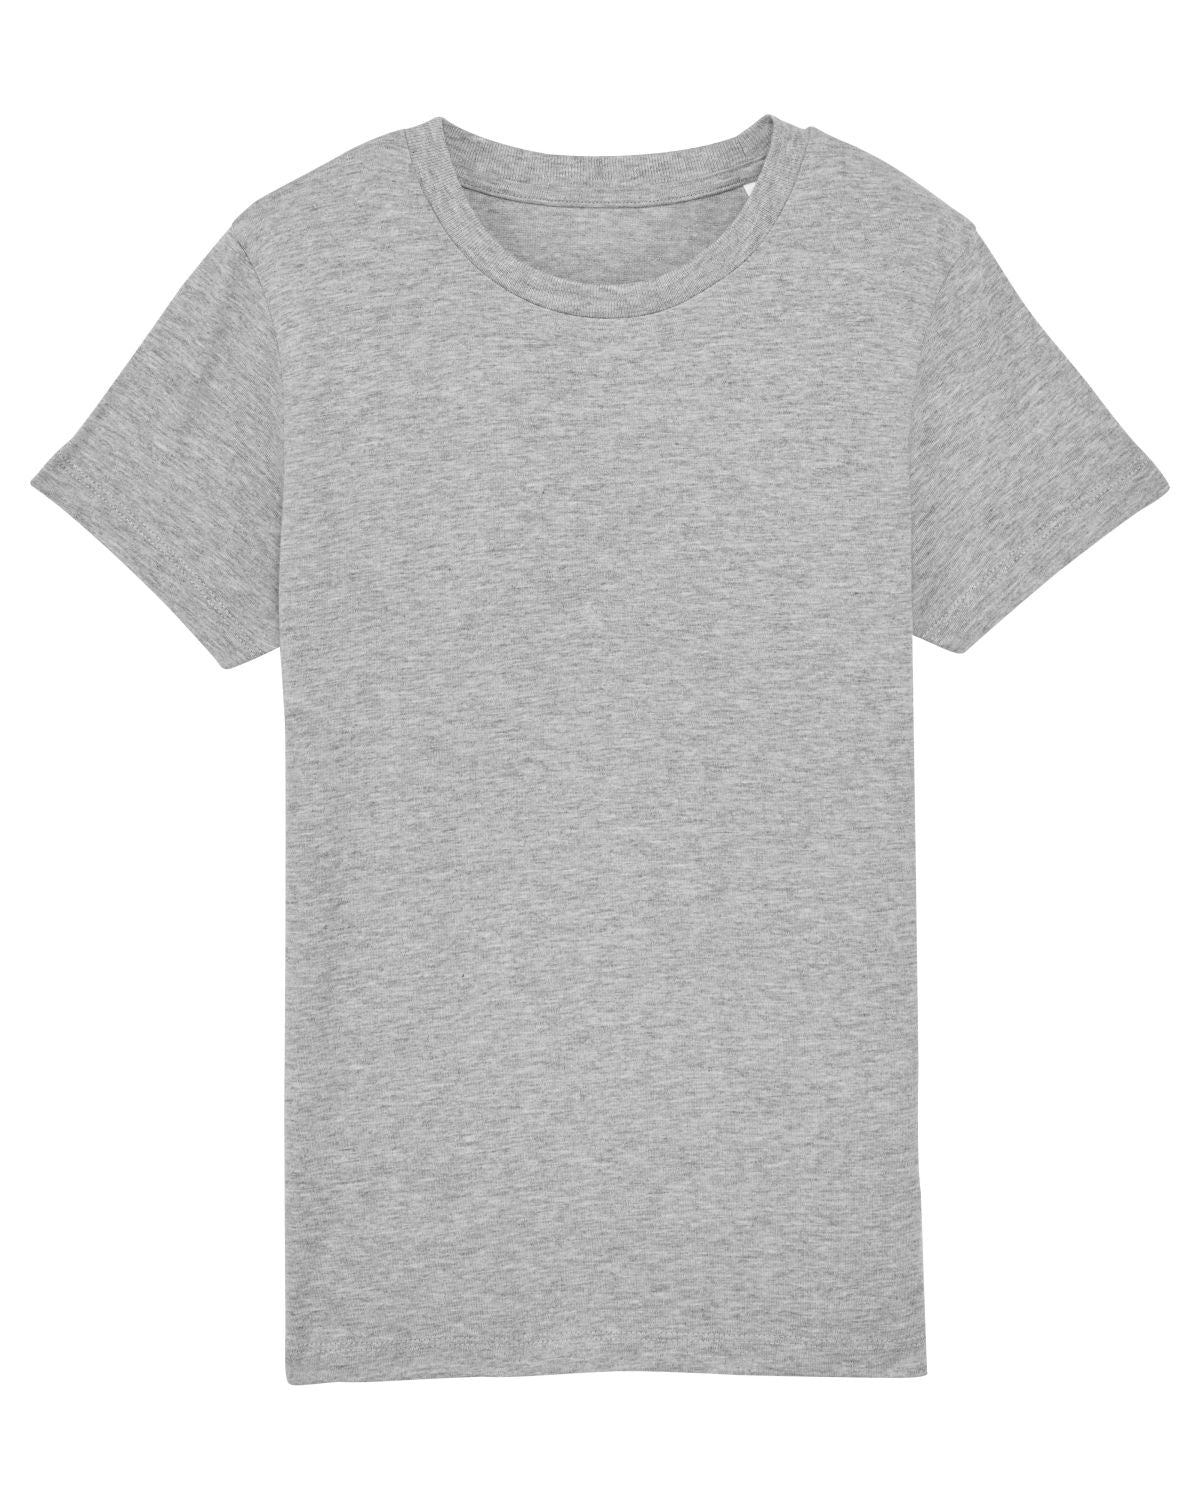 Stanley/Stella's - Mini Creator T-shirt - Heather Grey